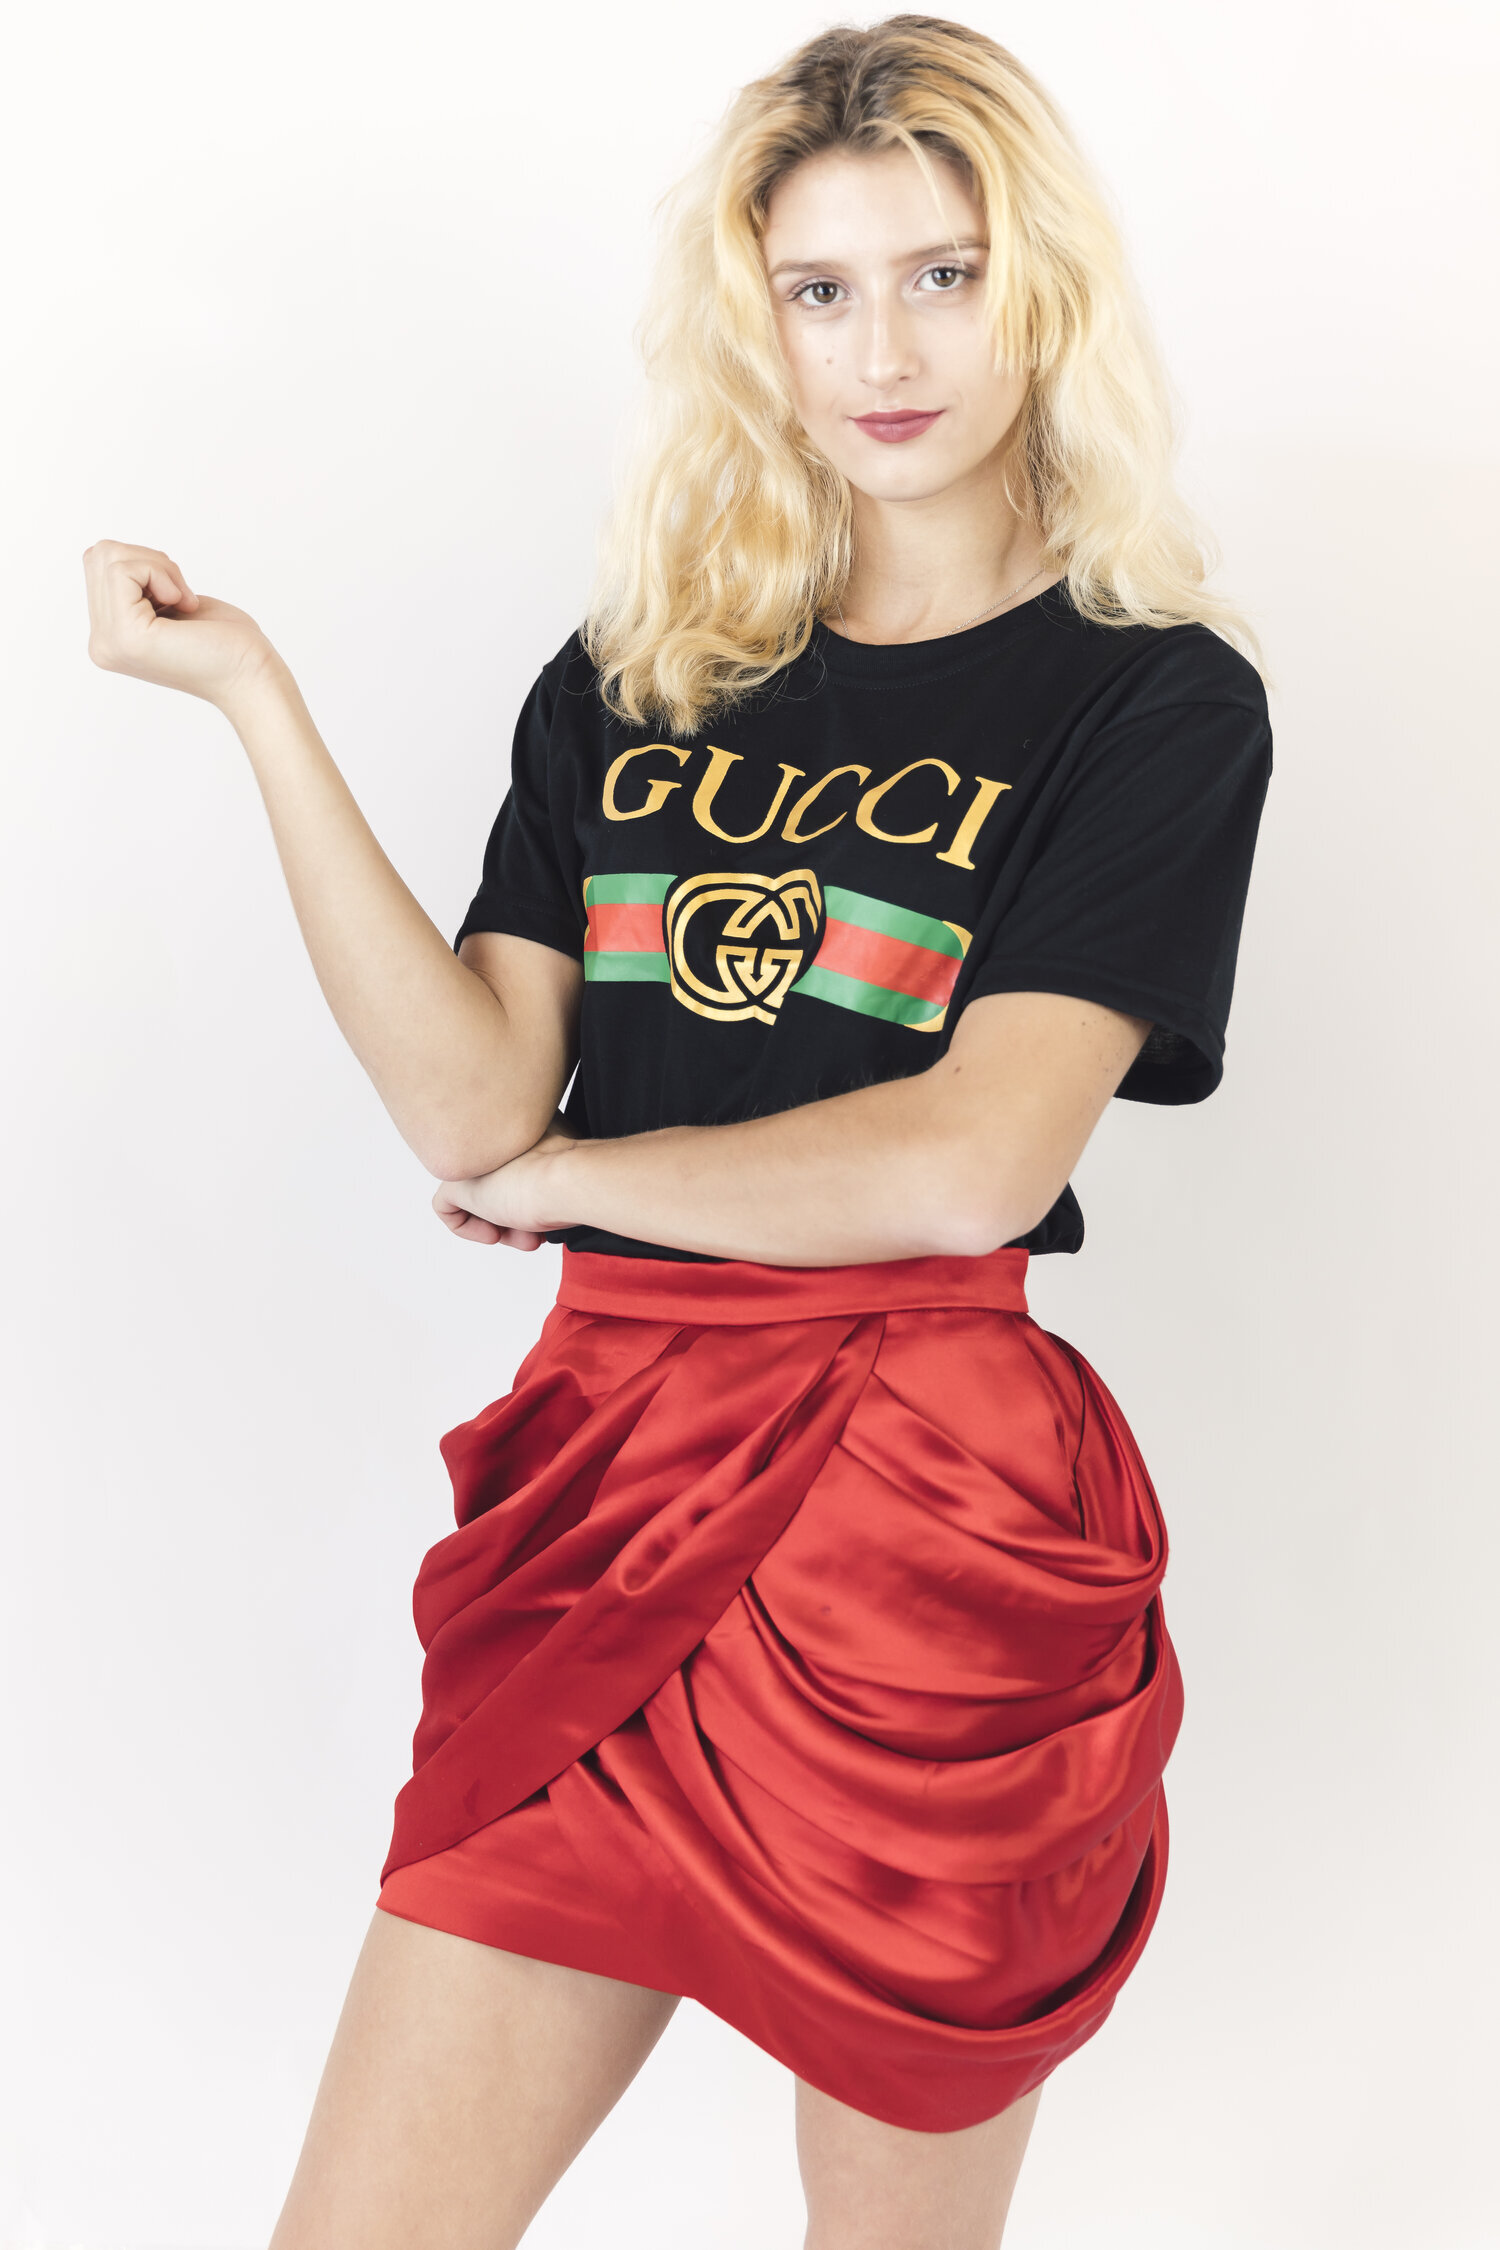 gucci inspired queen t shirt